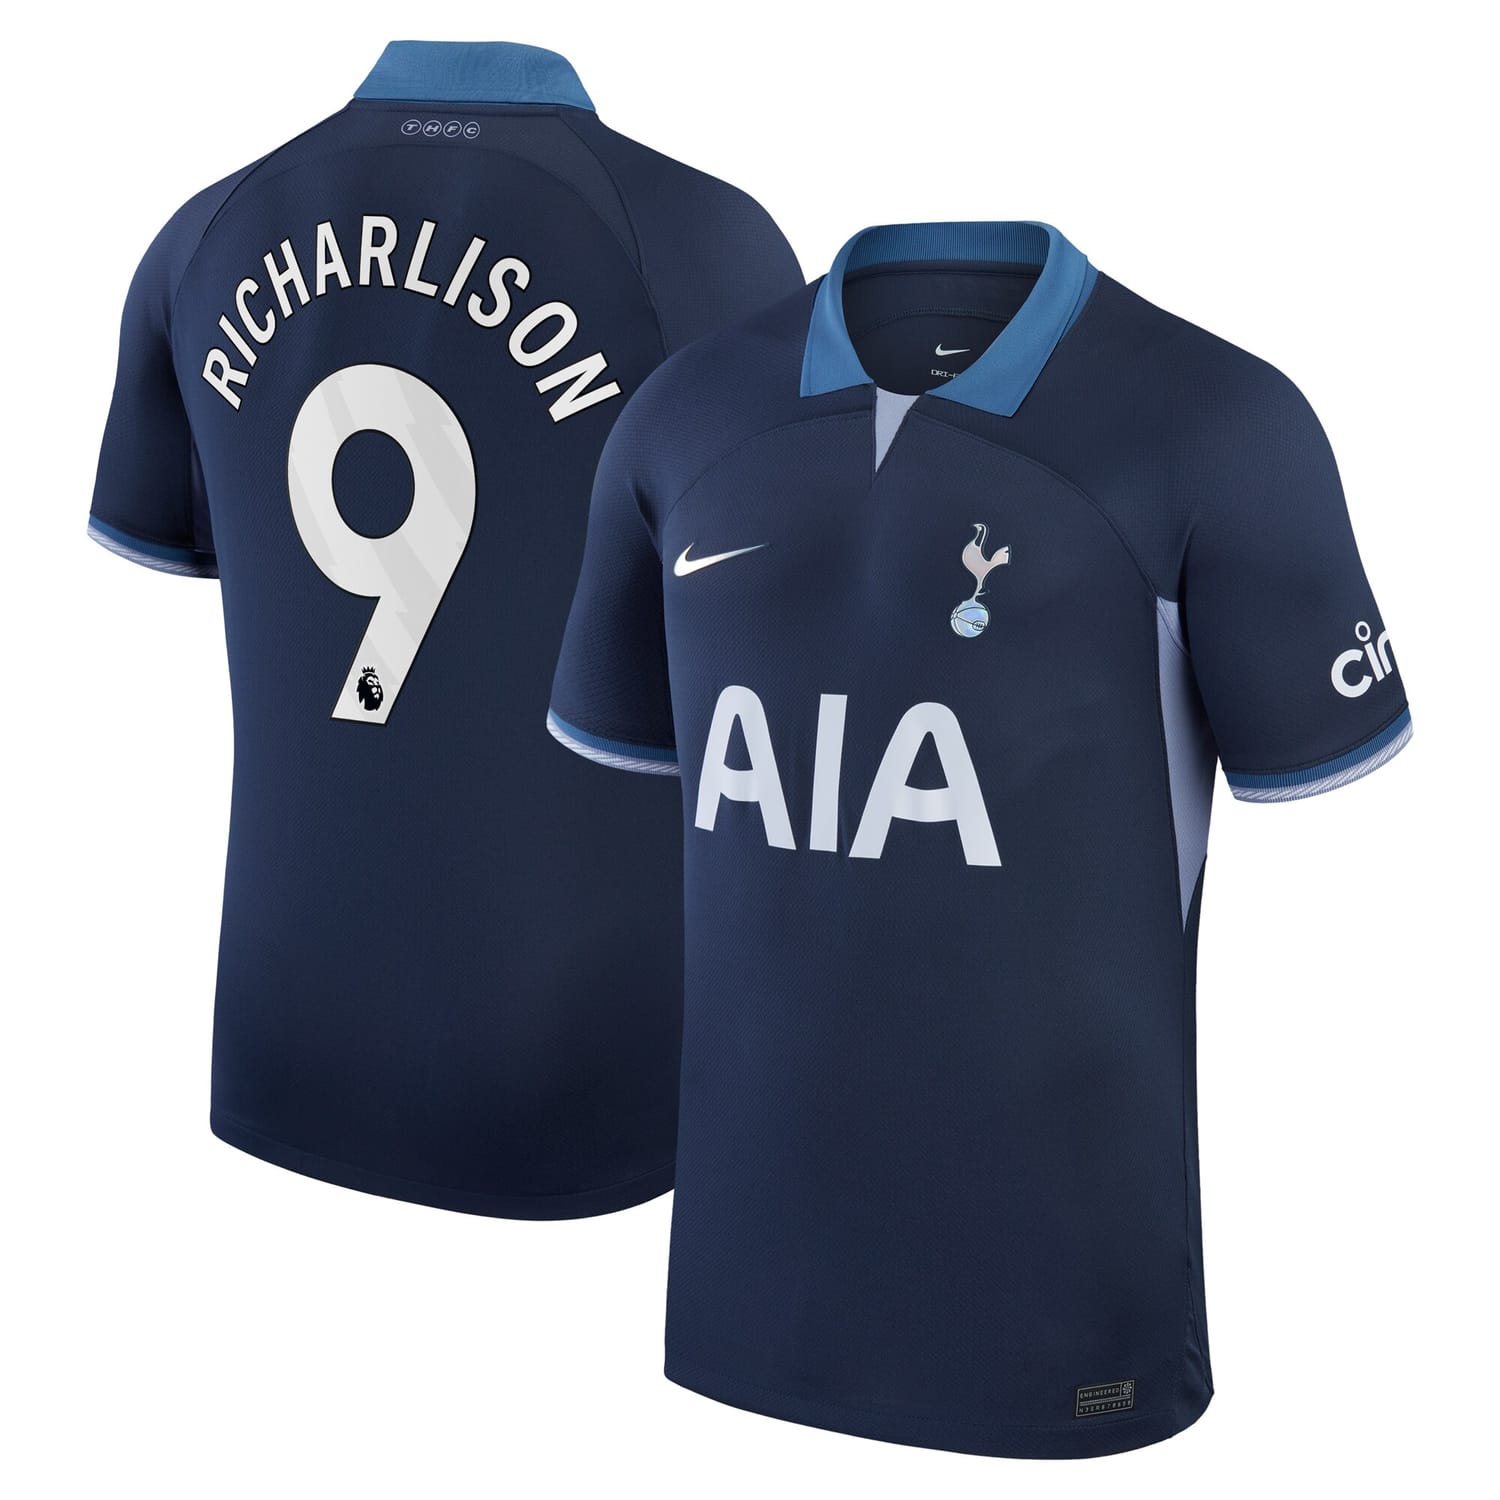 Premier League Tottenham Hotspur Away Jersey Shirt 2023-24 player Richarlison 9 printing for Men